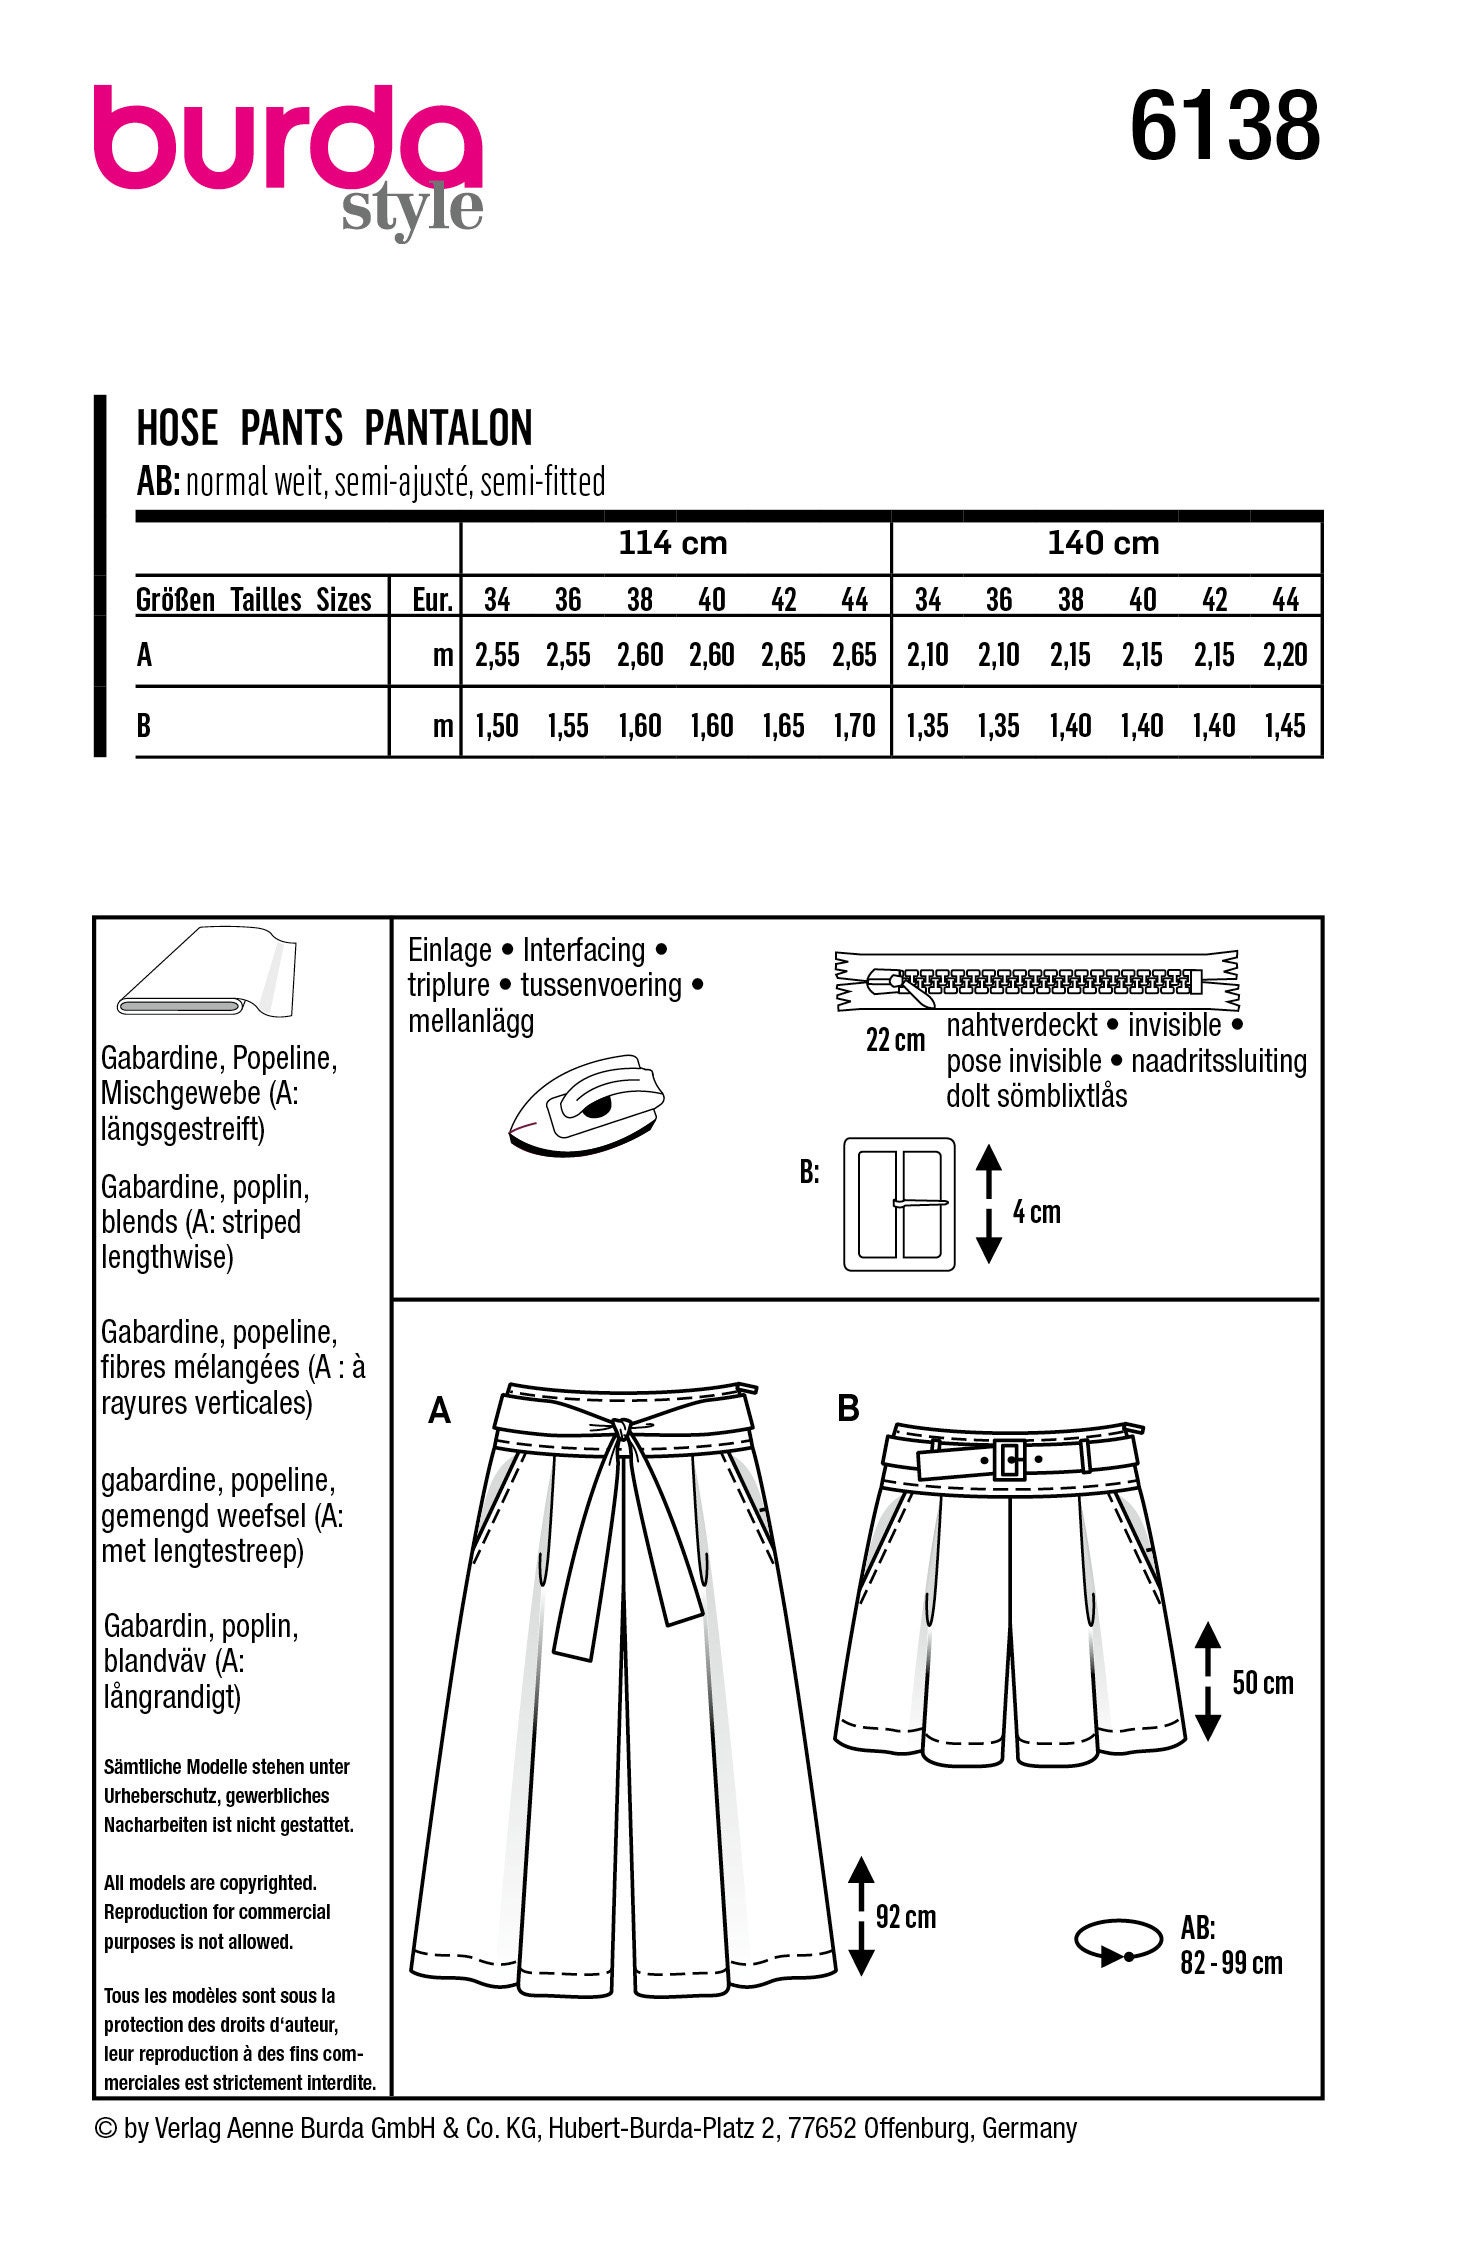 Burda Style 6138 Pants Step by Step Instructions | Etsy